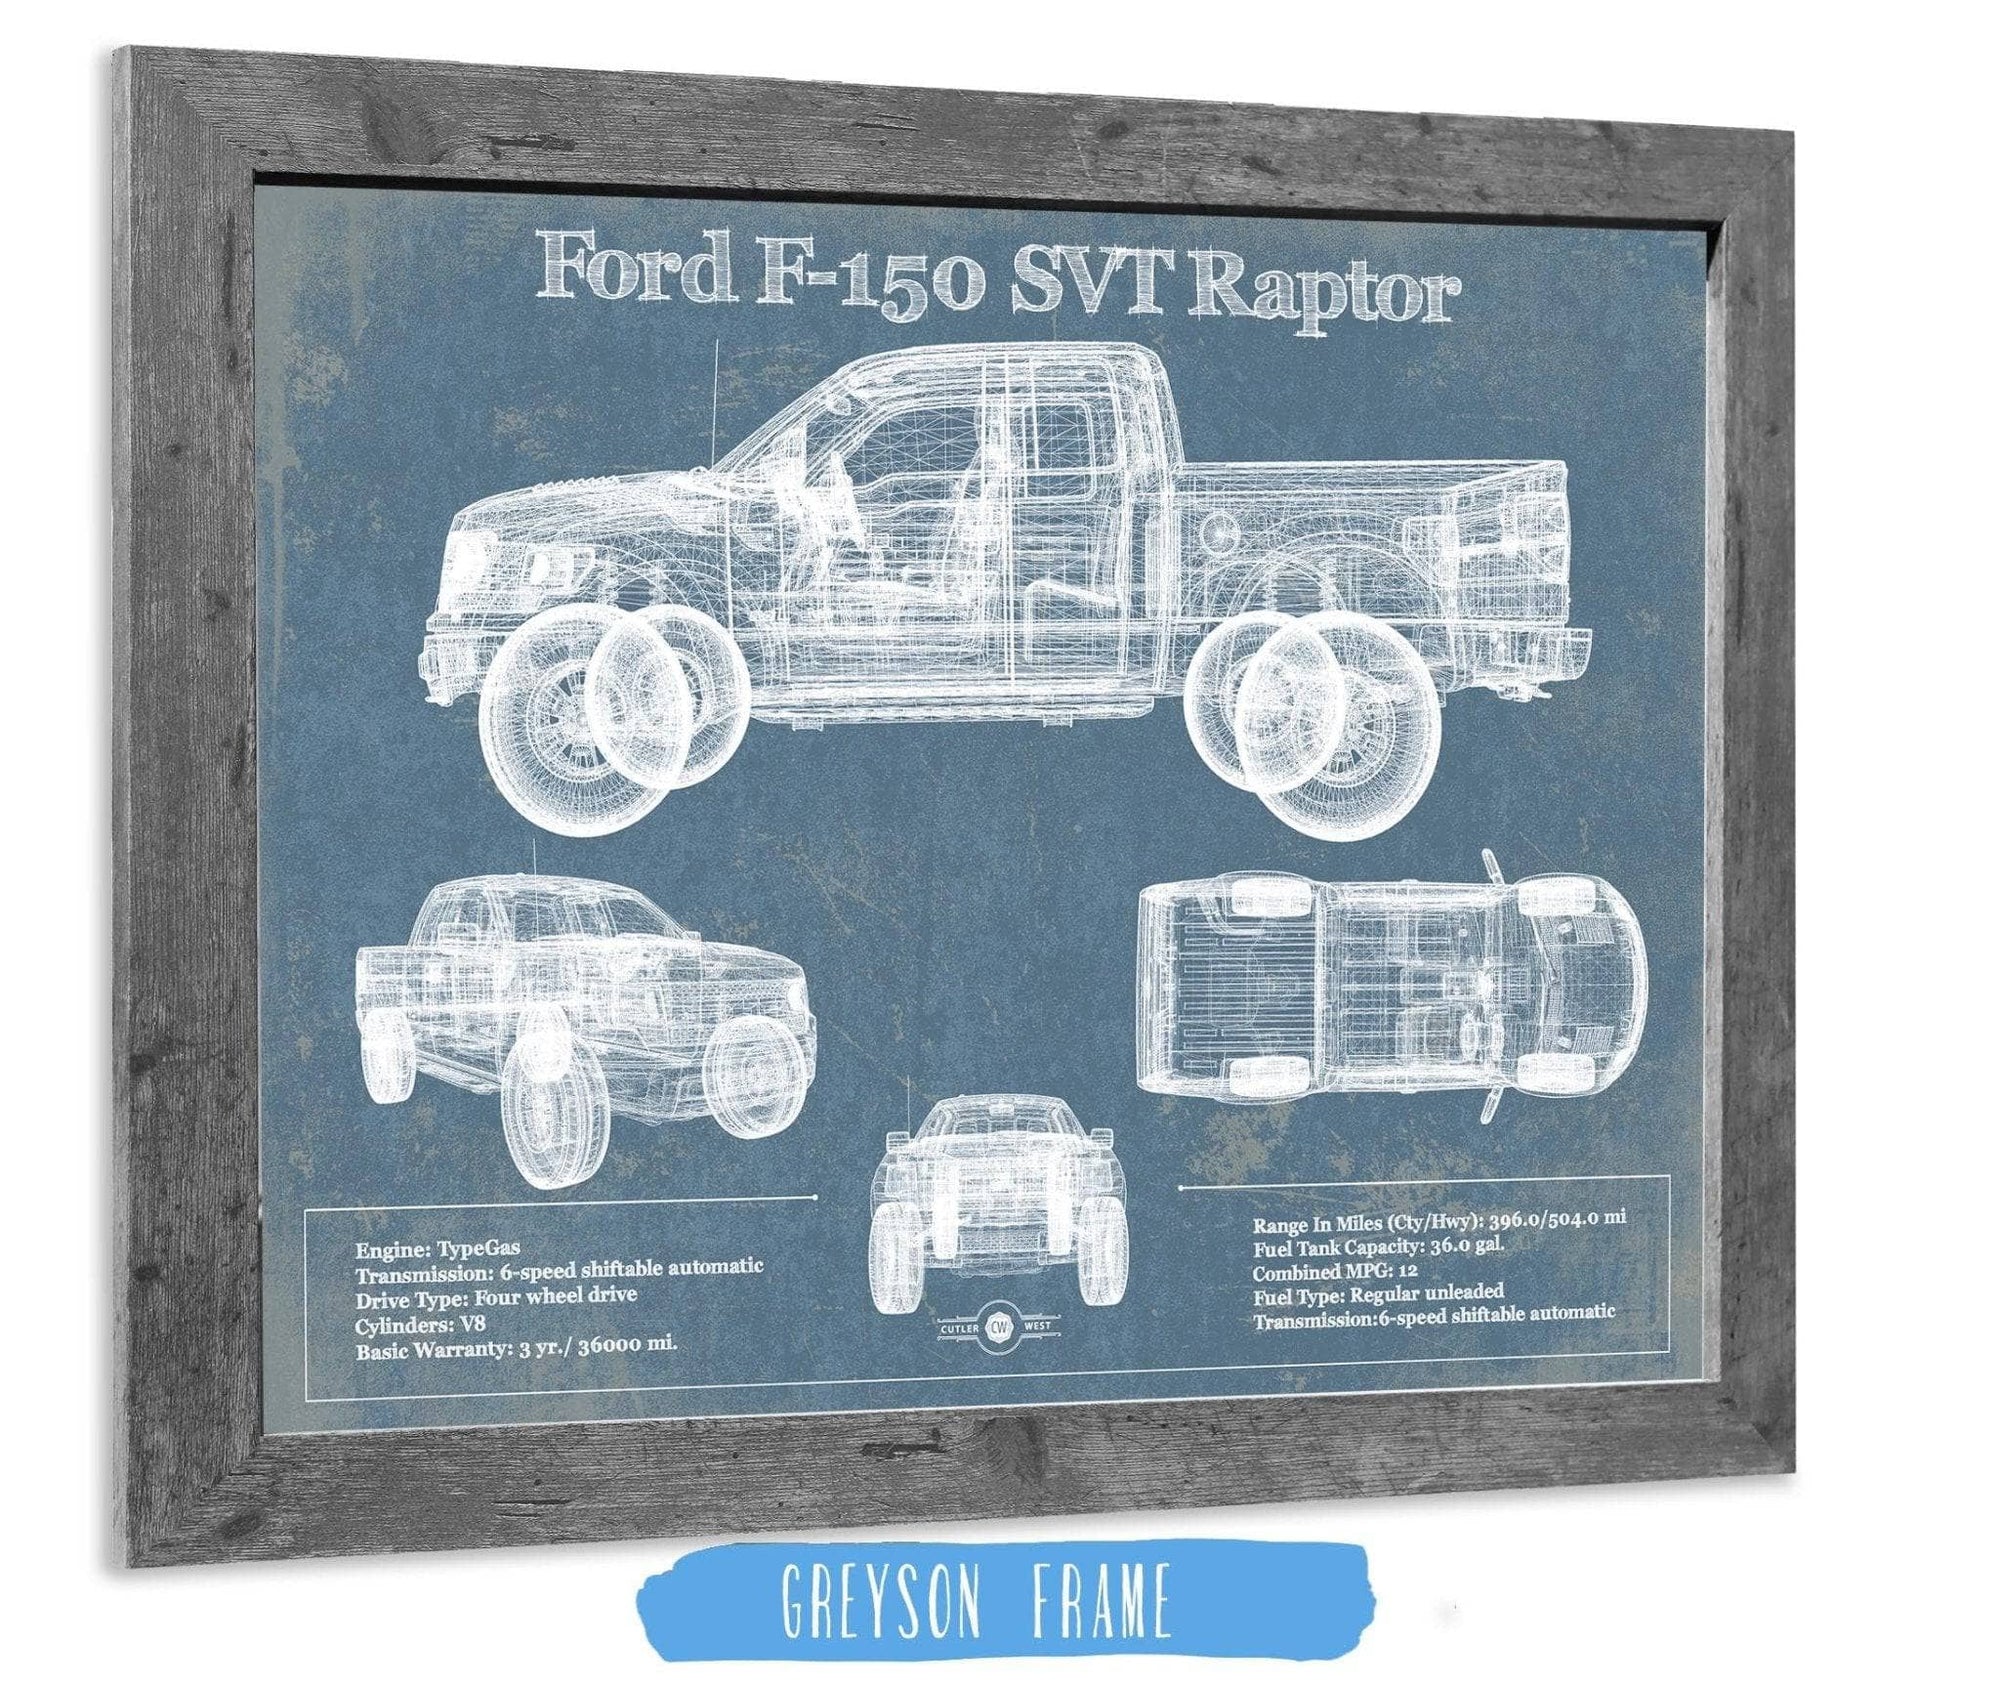 Cutler West Ford Collection 14" x 11" / Greyson Frame Ford F-150 SVT Raptor Truck Vintage Blueprint Auto Print (2011) 833110090